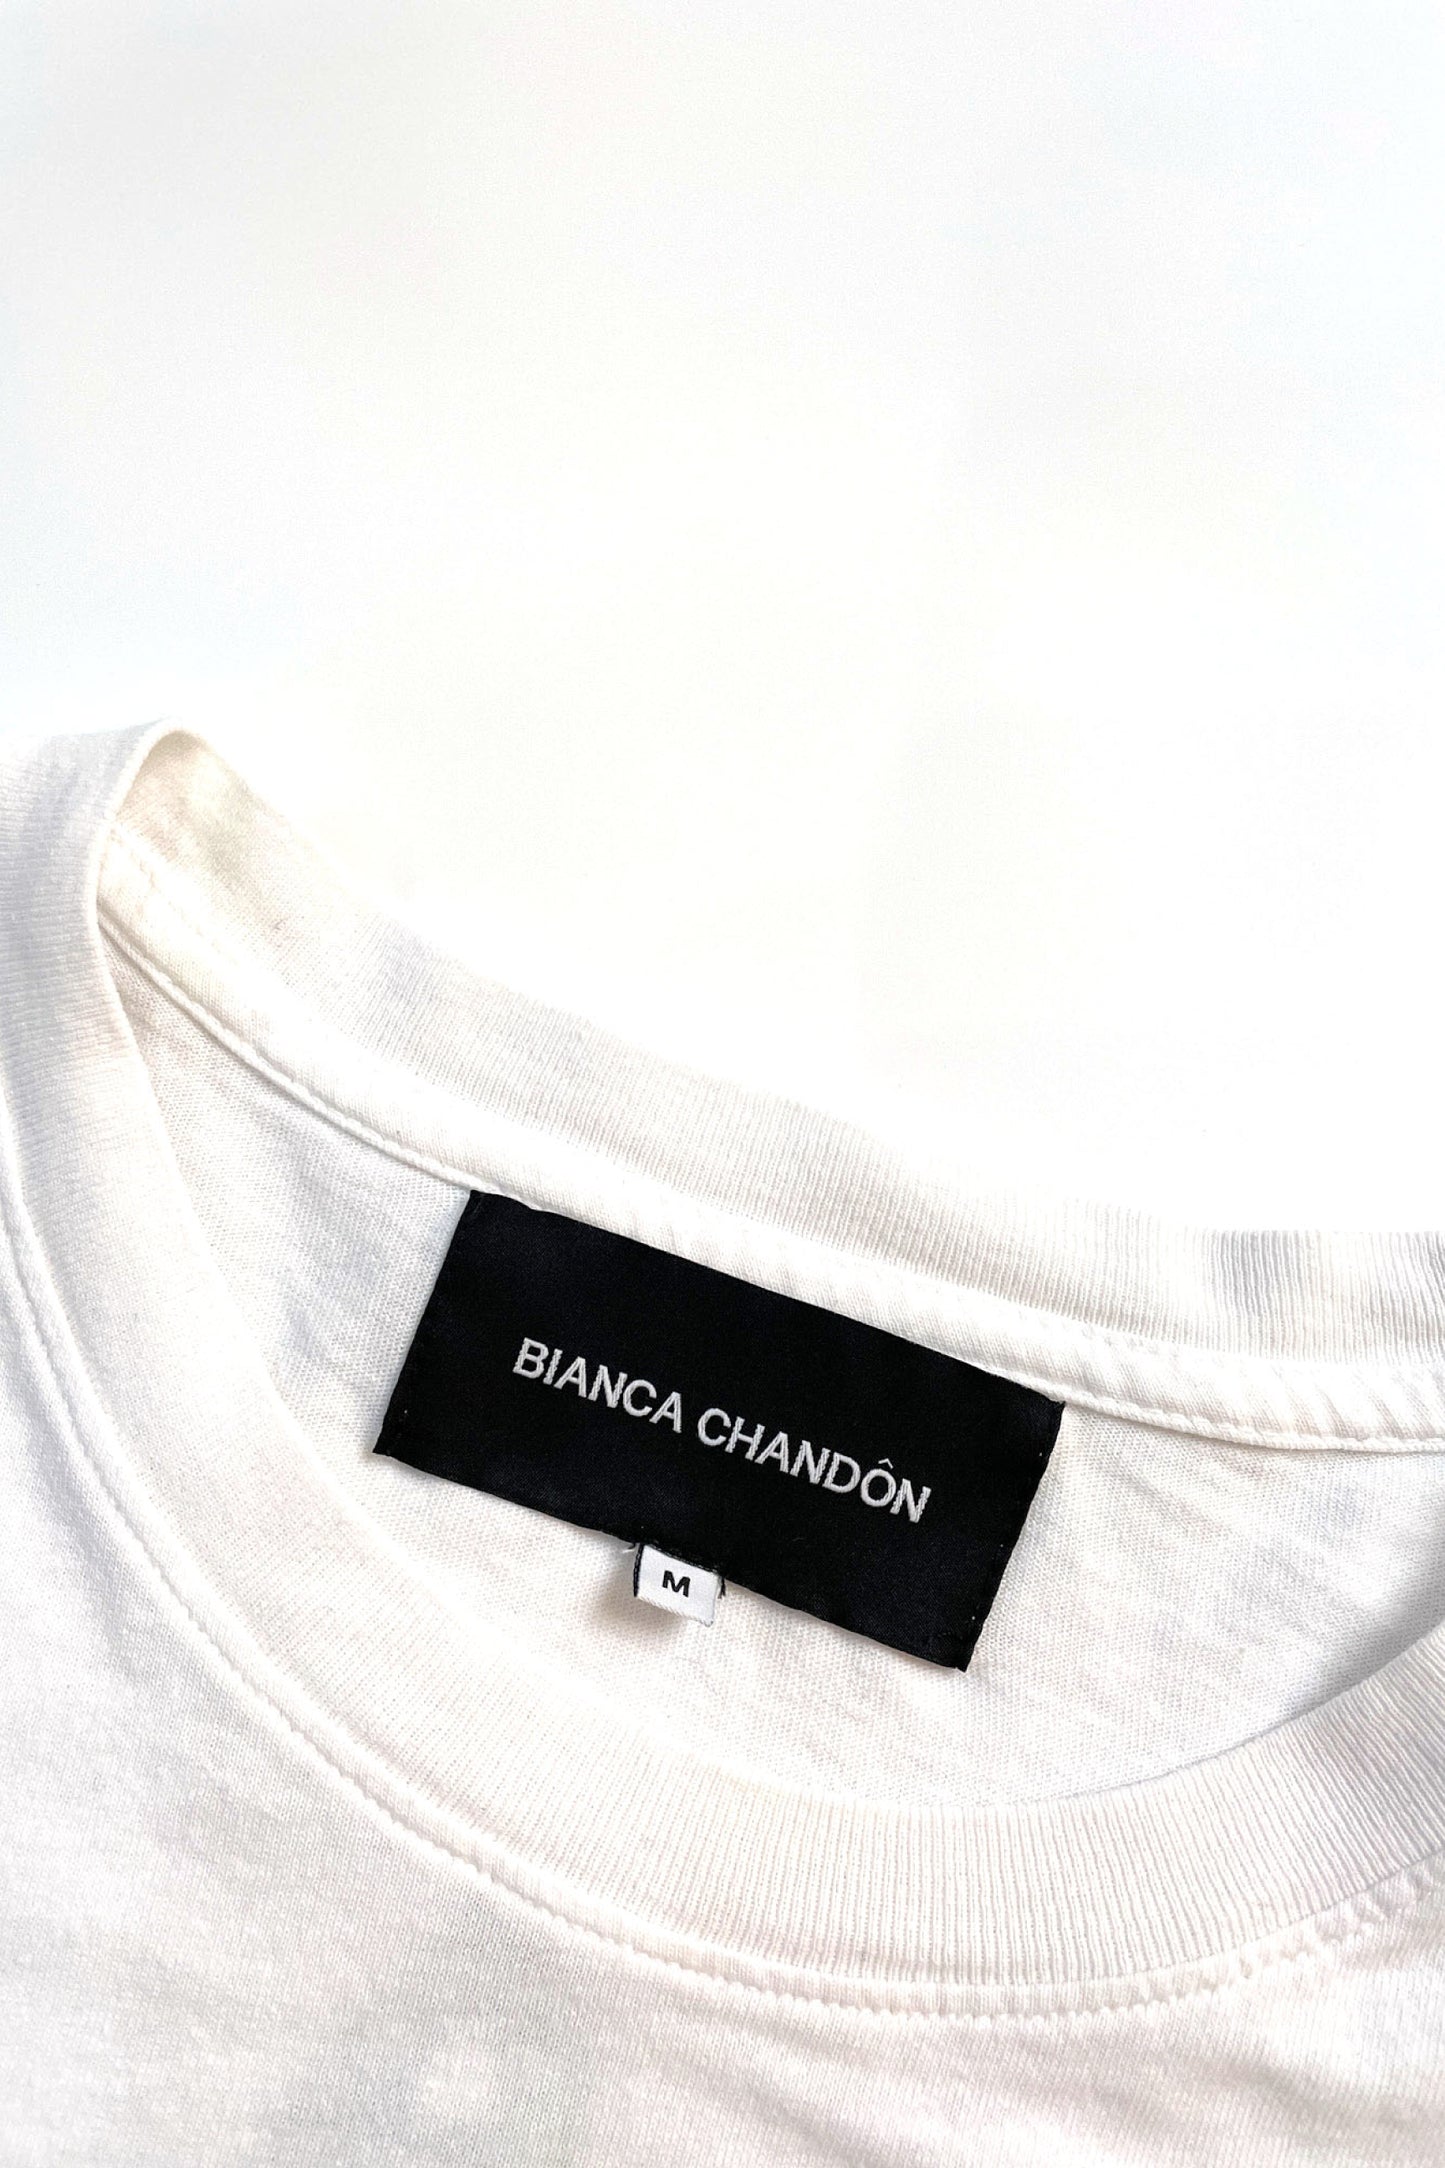 Made in USA BIANCA CHANDON long-sleeves T-shirt